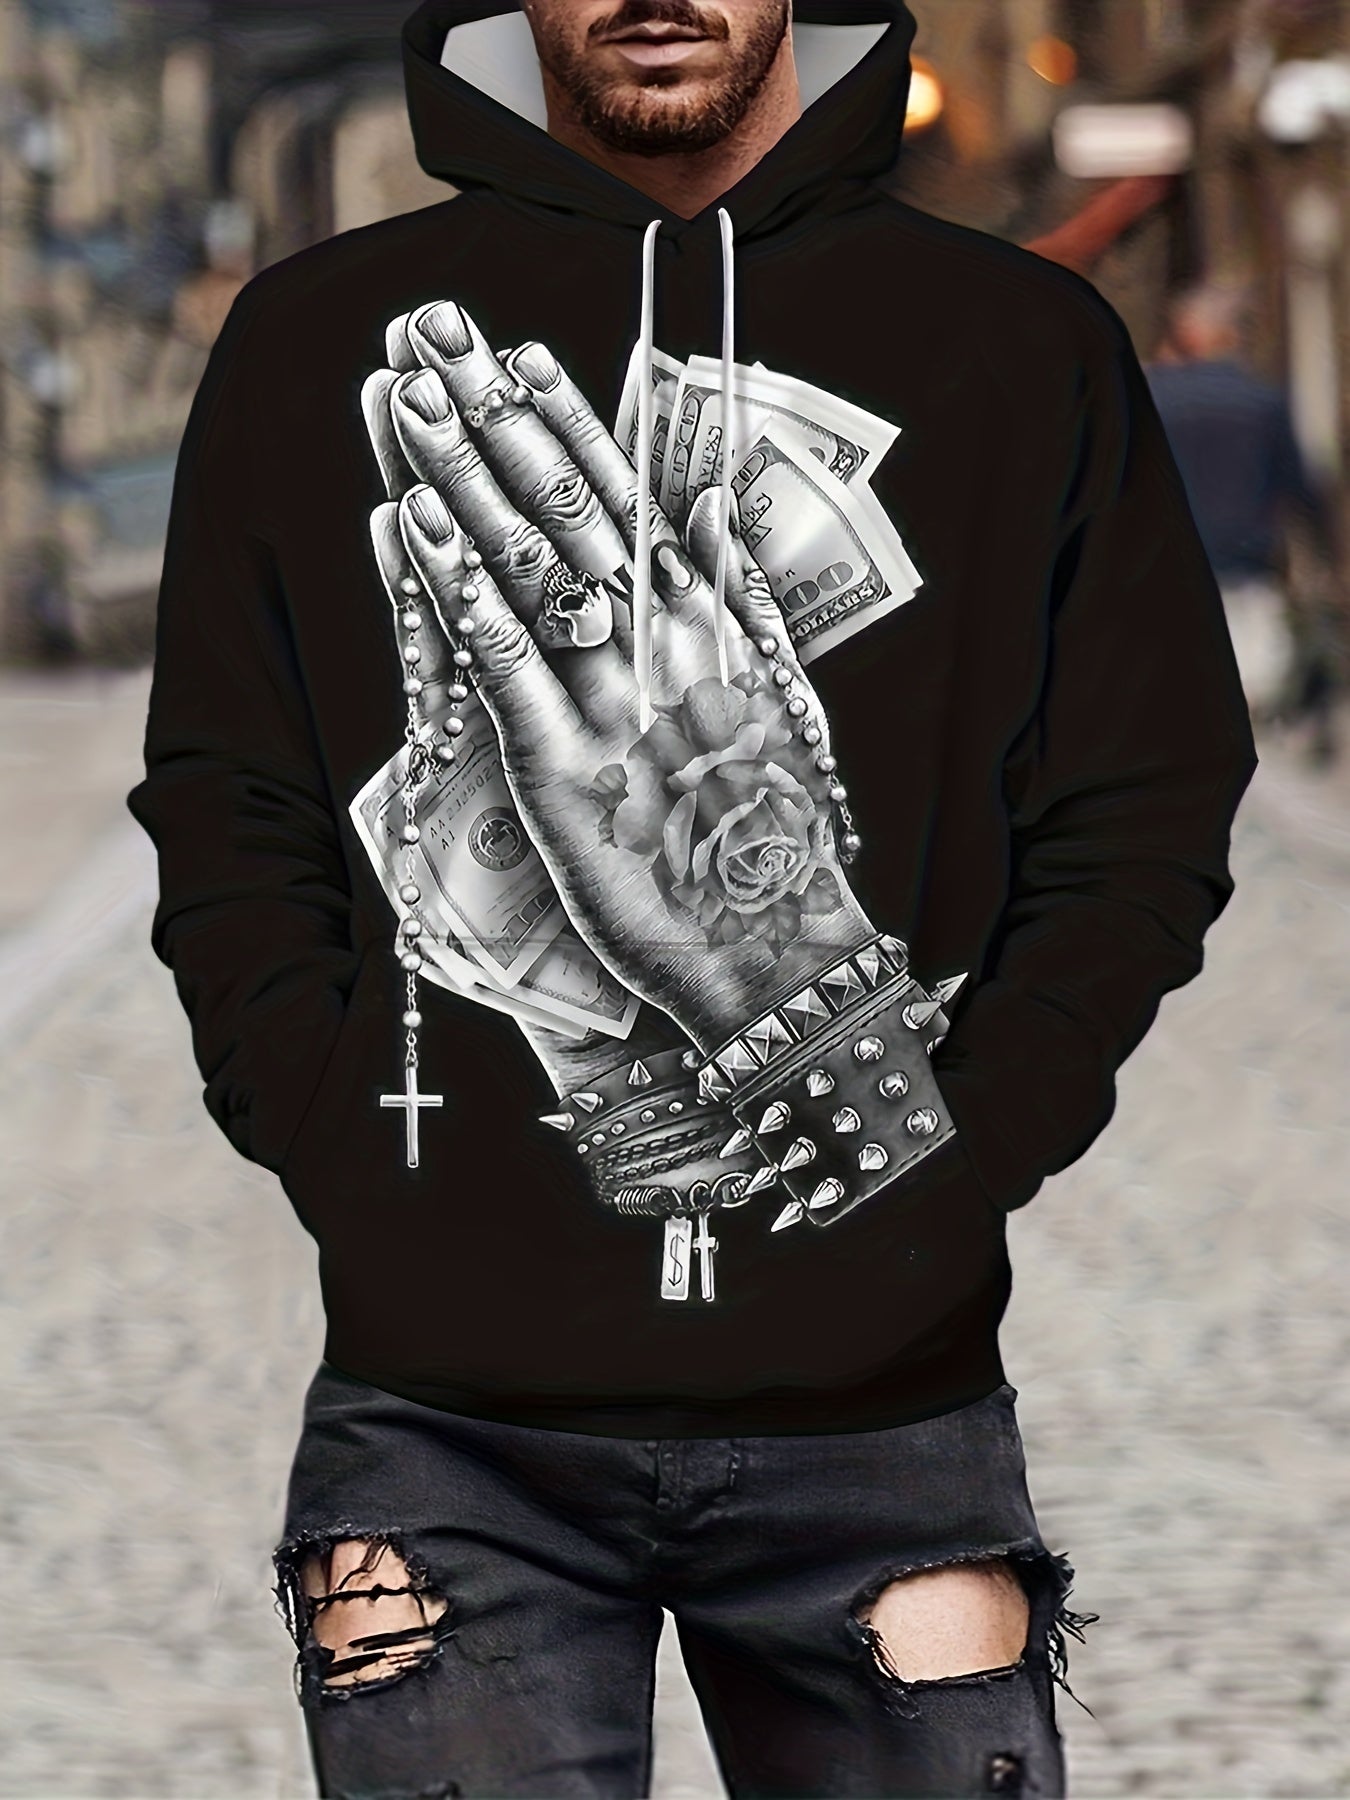 Retro Praying Hands Print Hoodie, Cool Hoodies For Men, Men